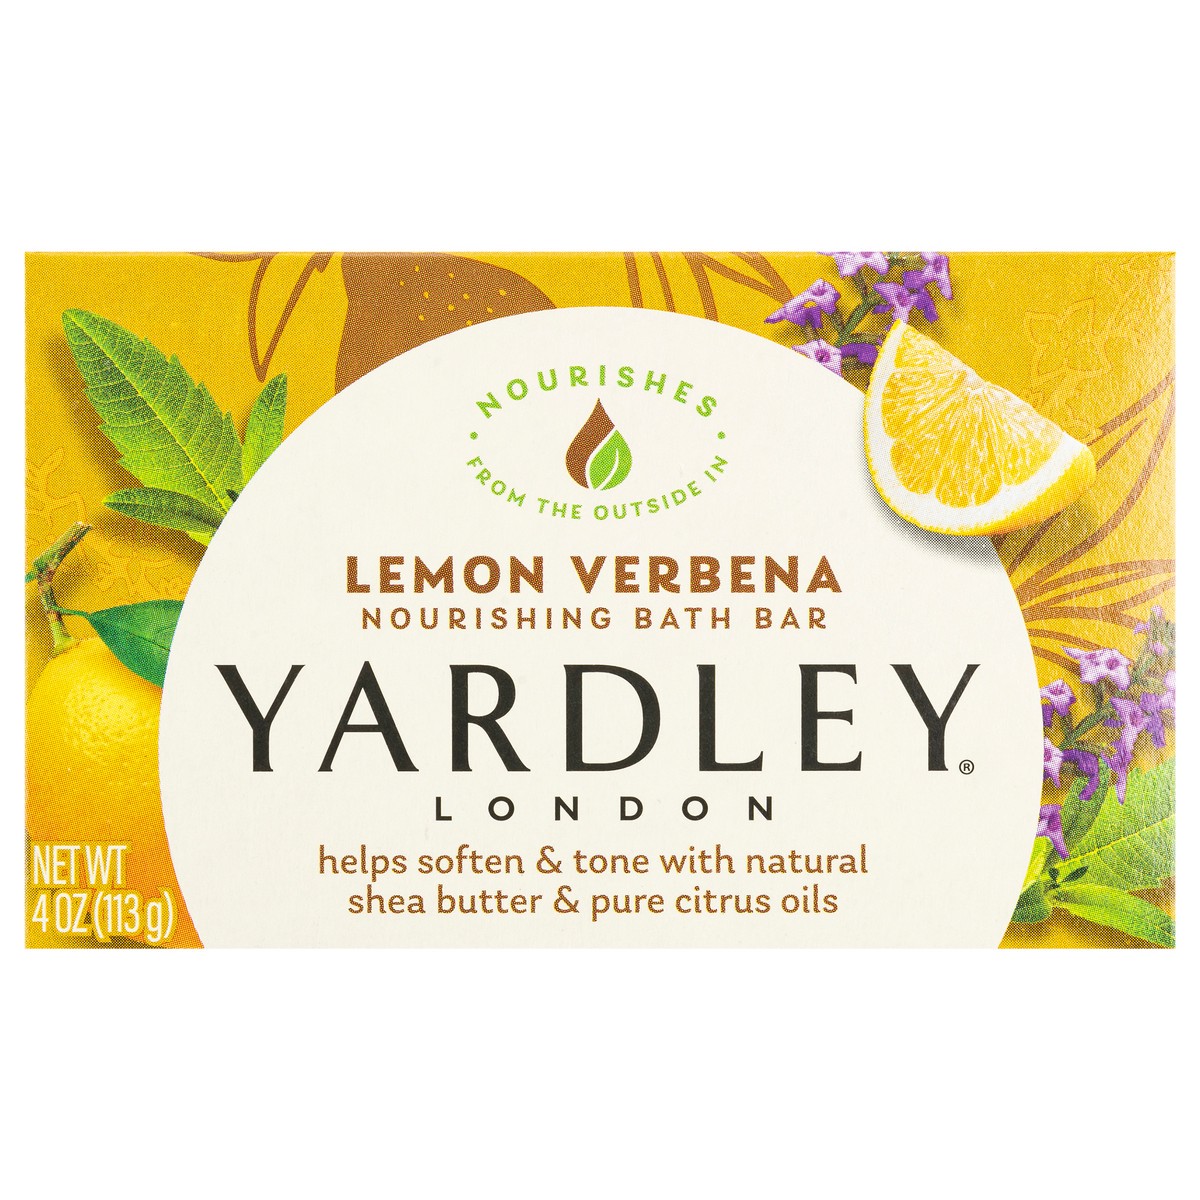 slide 8 of 12, Yardley London Nourishing Bath Soap Bar Lemon Verbena, Helps Soften & Tone Skin with Natural Shea Butter & Pure Citrus Oils, 4.0 oz Bath Bar, 1 Soap Bar, 4 oz